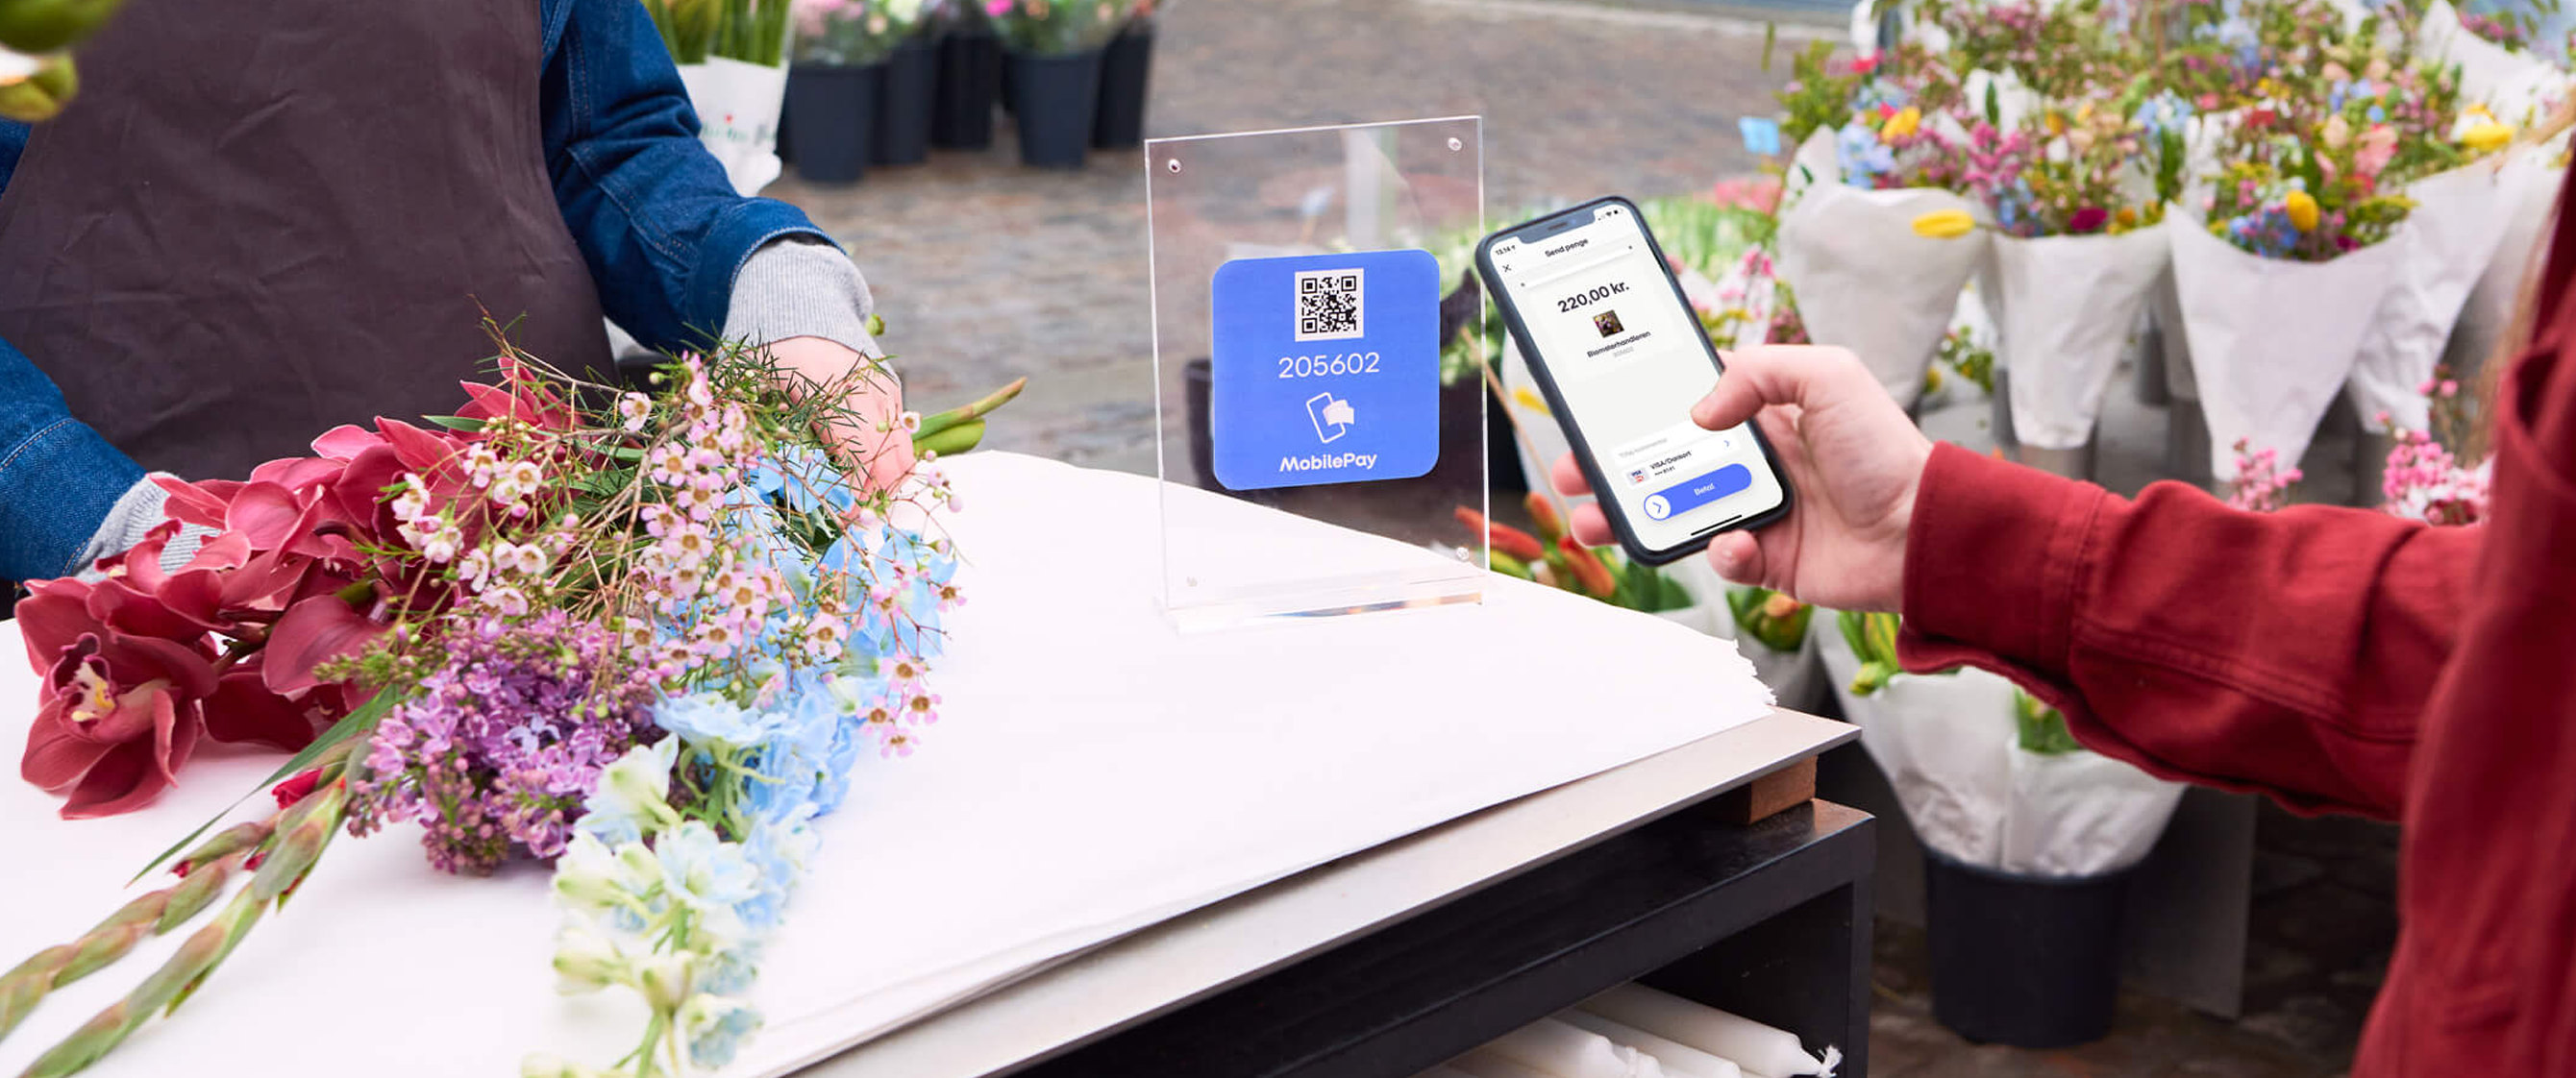 Billede som viser MobilePay-betaling hos en blomsterhandler.